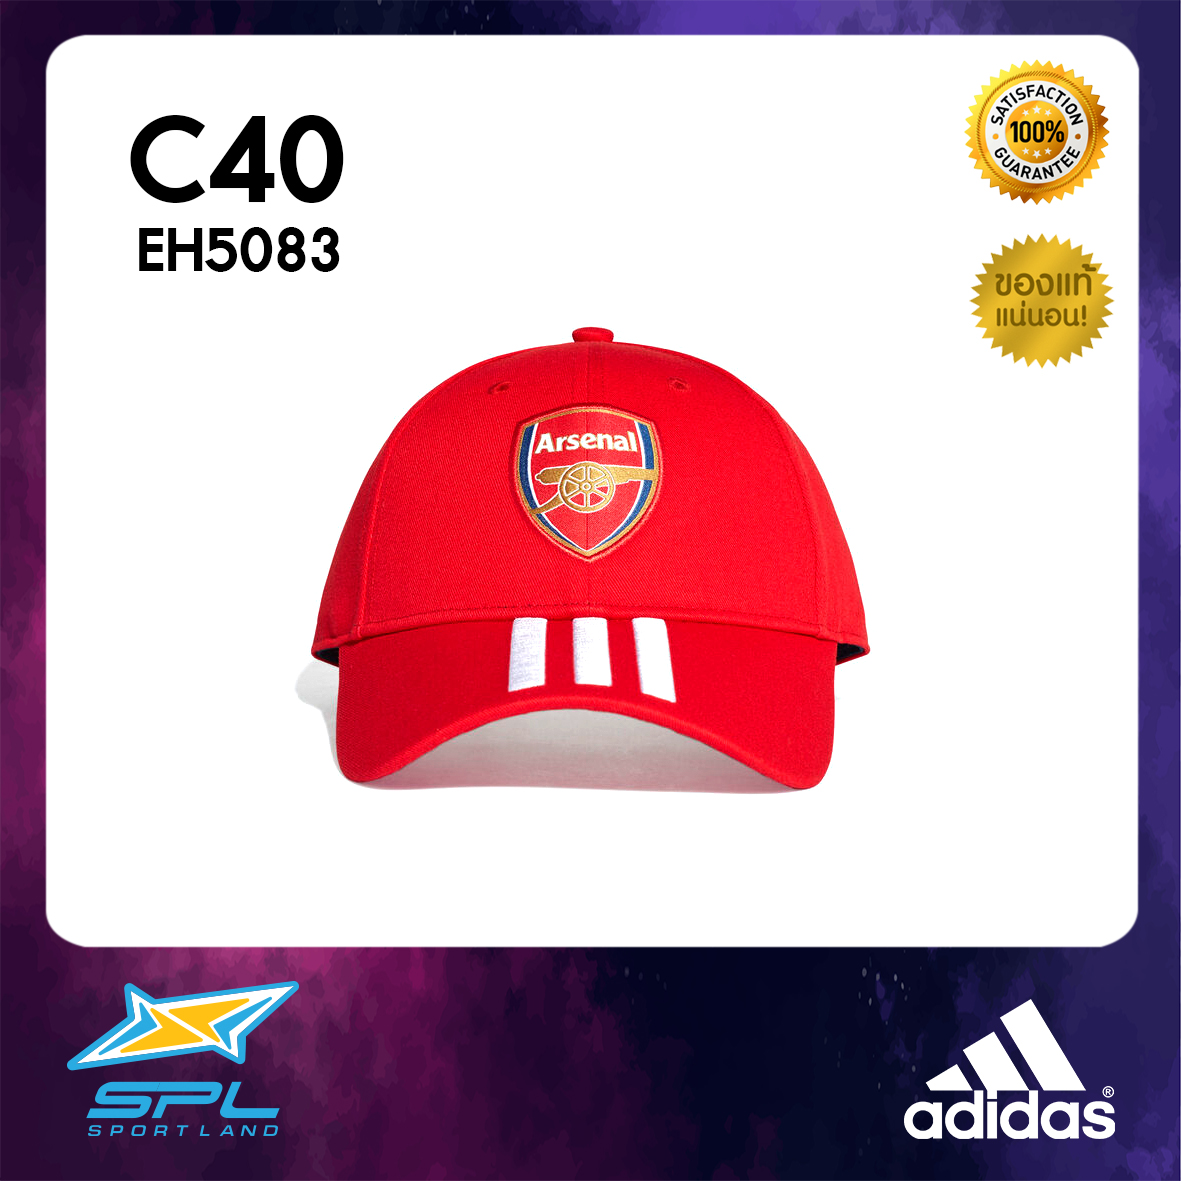 Adidas หมวก แฟชั่น อาดิดาส หมวกกีฬา หมวกแฟชั่น หมวกแก็ป Foot ball Man Cap Arsenal C40 3S EH5083 R(800)